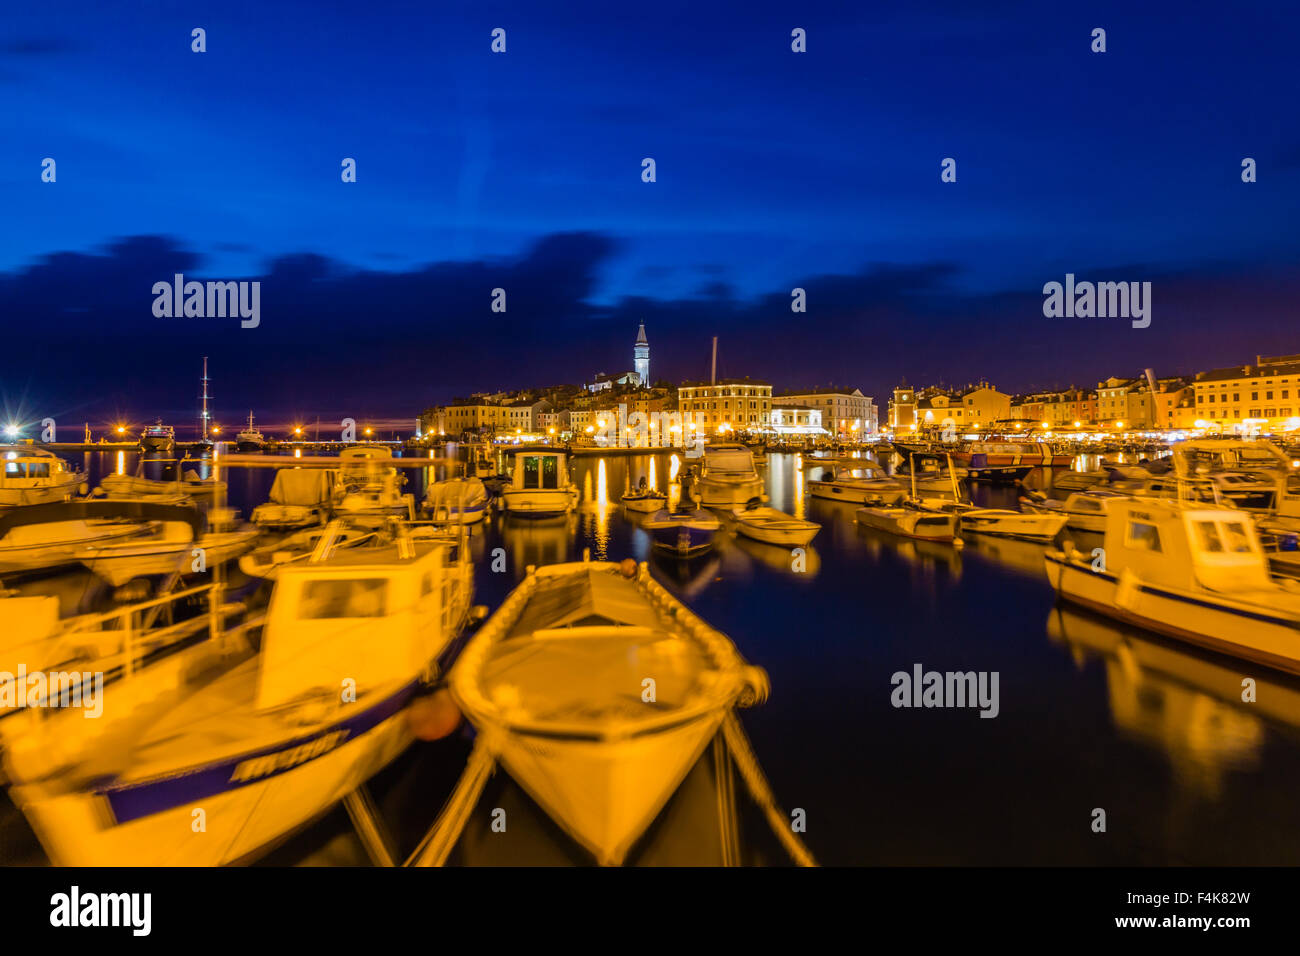 Small boats inside the harbor of an old Venetian town, Rovinj, Croatia Stock Photo